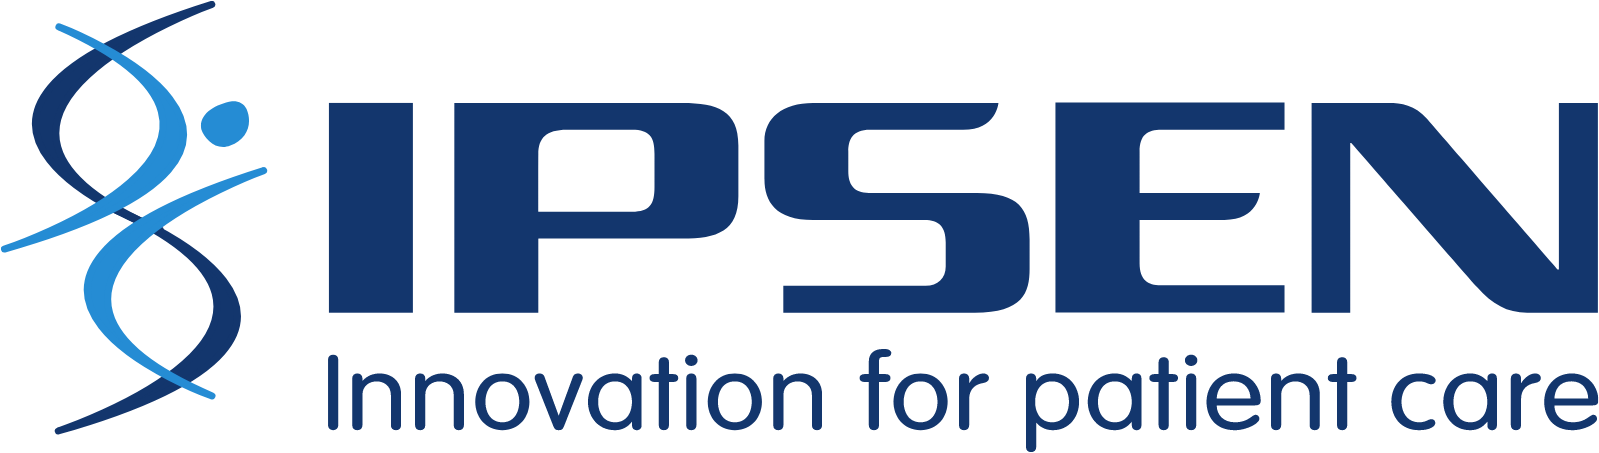 Ipsen logo large (transparent PNG)